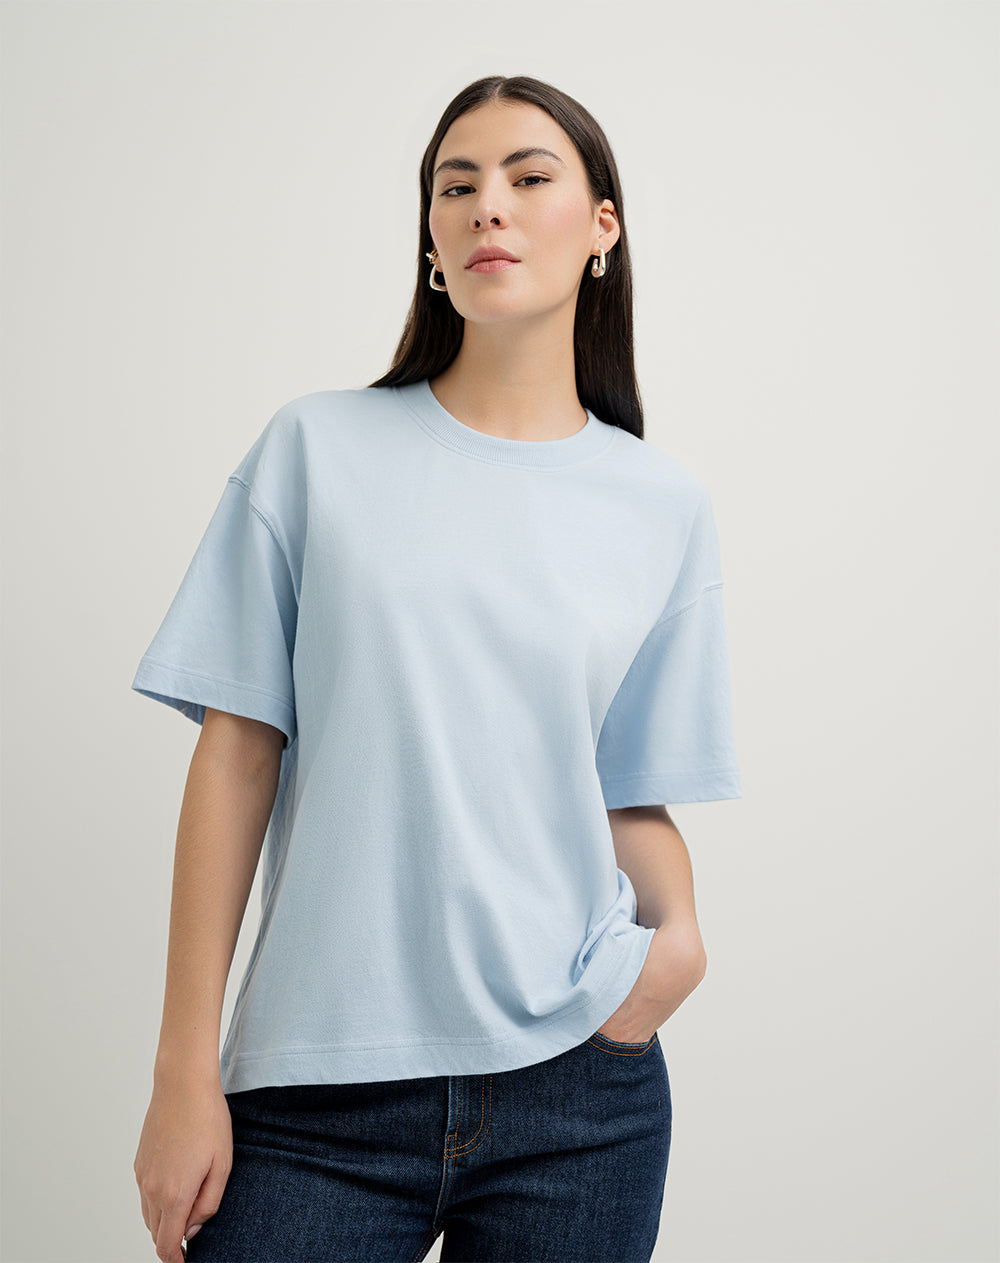 Camiseta  new triestina oversized fit manga corta azul clara